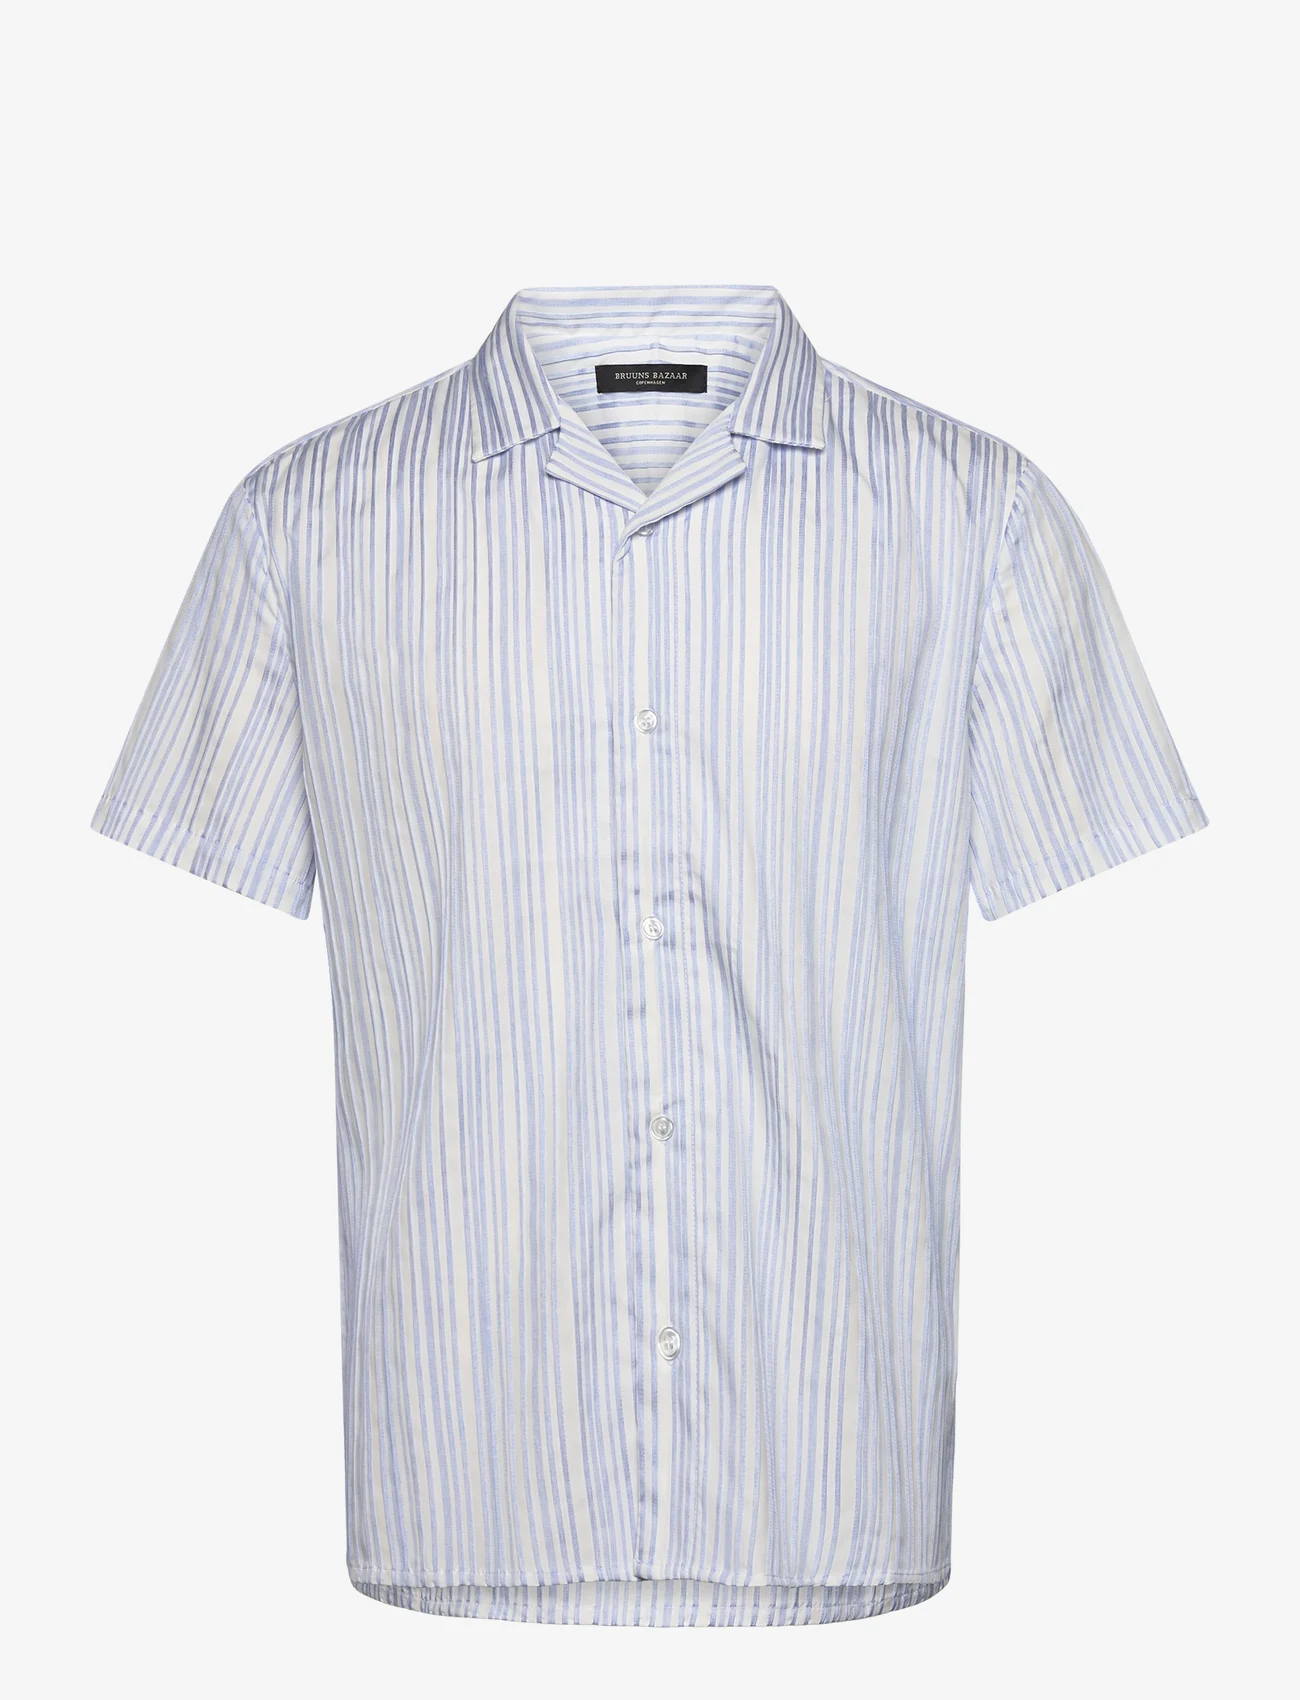 Bruuns Bazaar - DimensionBBHomme shirt - overhemden met korte mouw - light blue stripe - 0